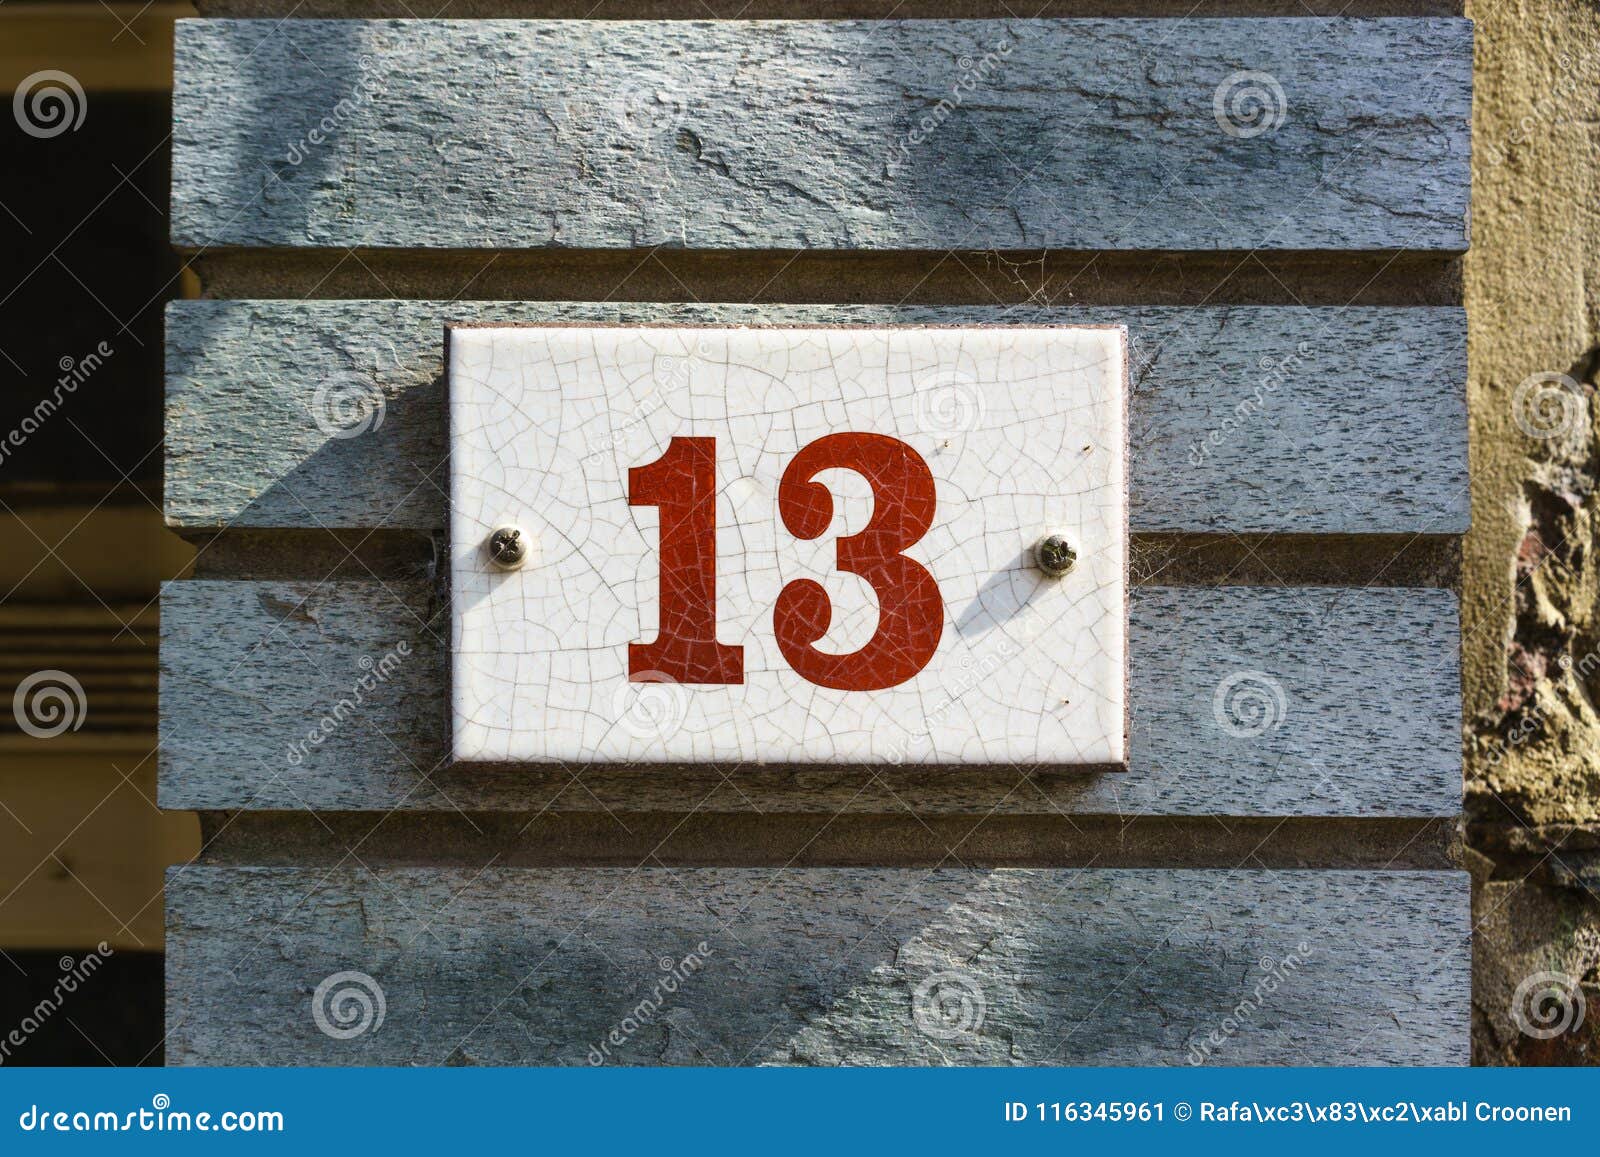 Номер 13 номер 5. Дом номер 13. Дом номер 13 картинка. Число 13 фото номер дома. Цифра 13 в адресе.